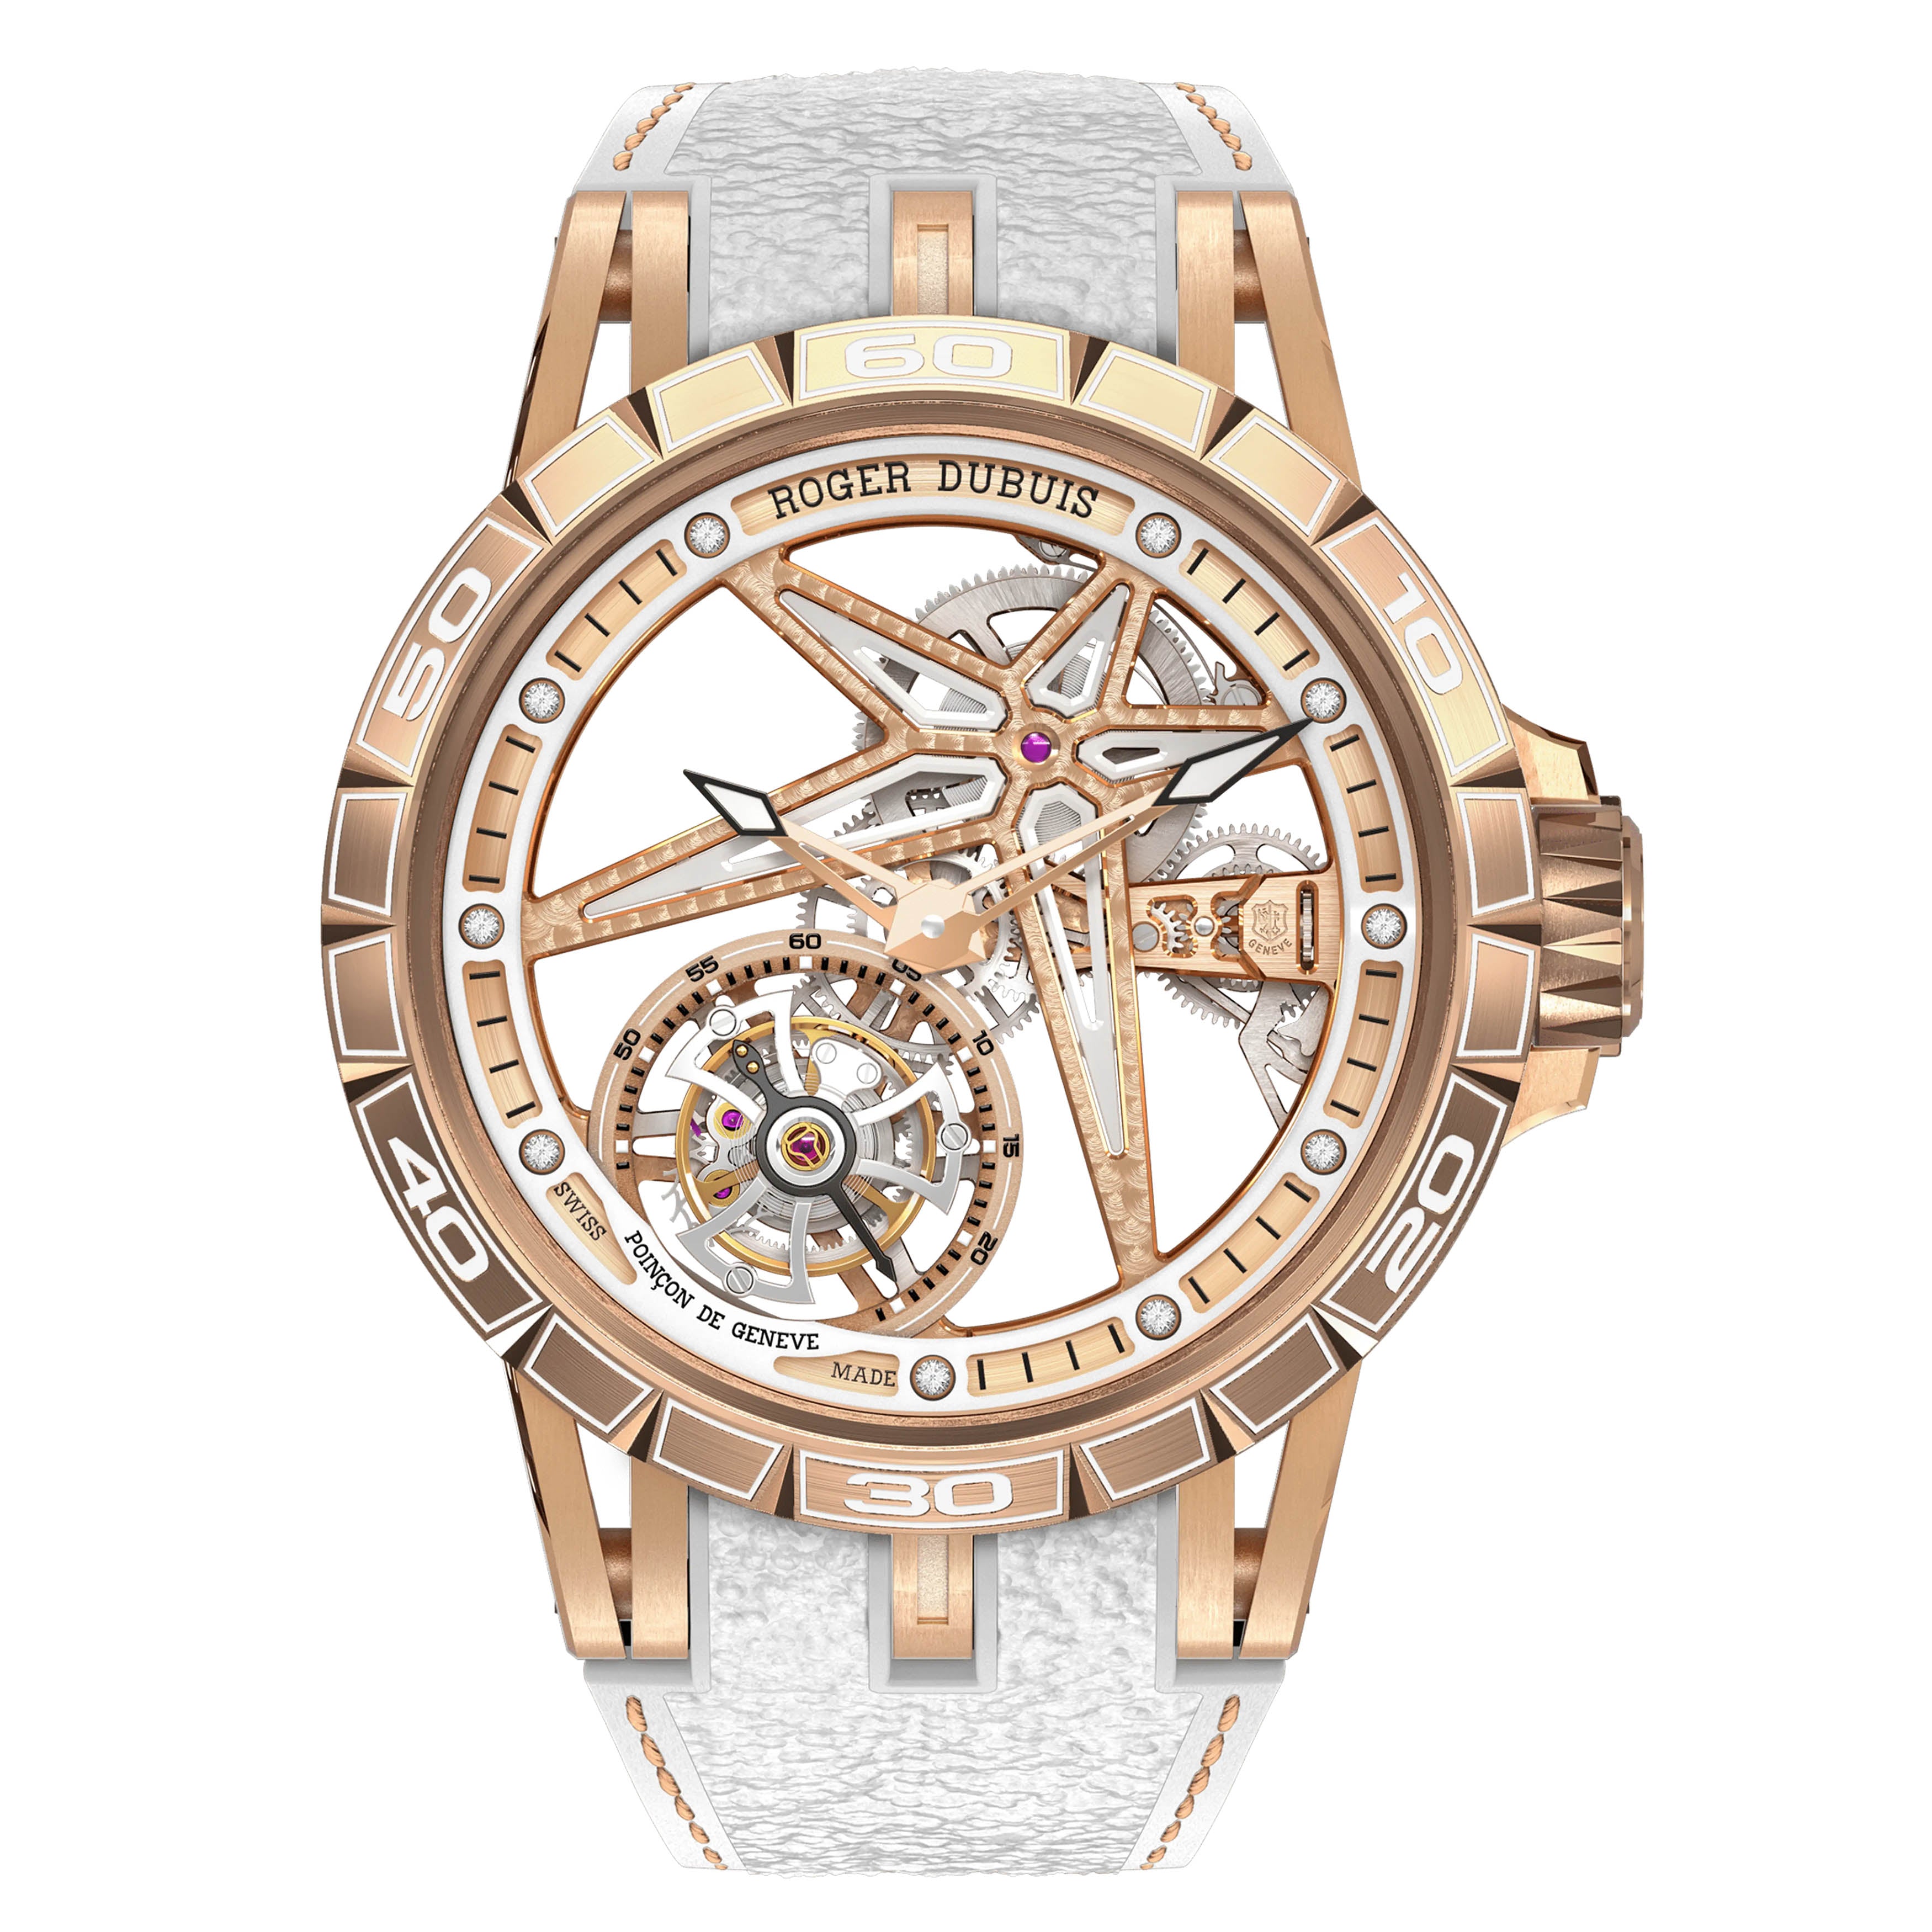 Roger Dubuis Excalibur Spider Monotourbillon Watch, 39mm Gold White Skeleton Dial, DBEX0816